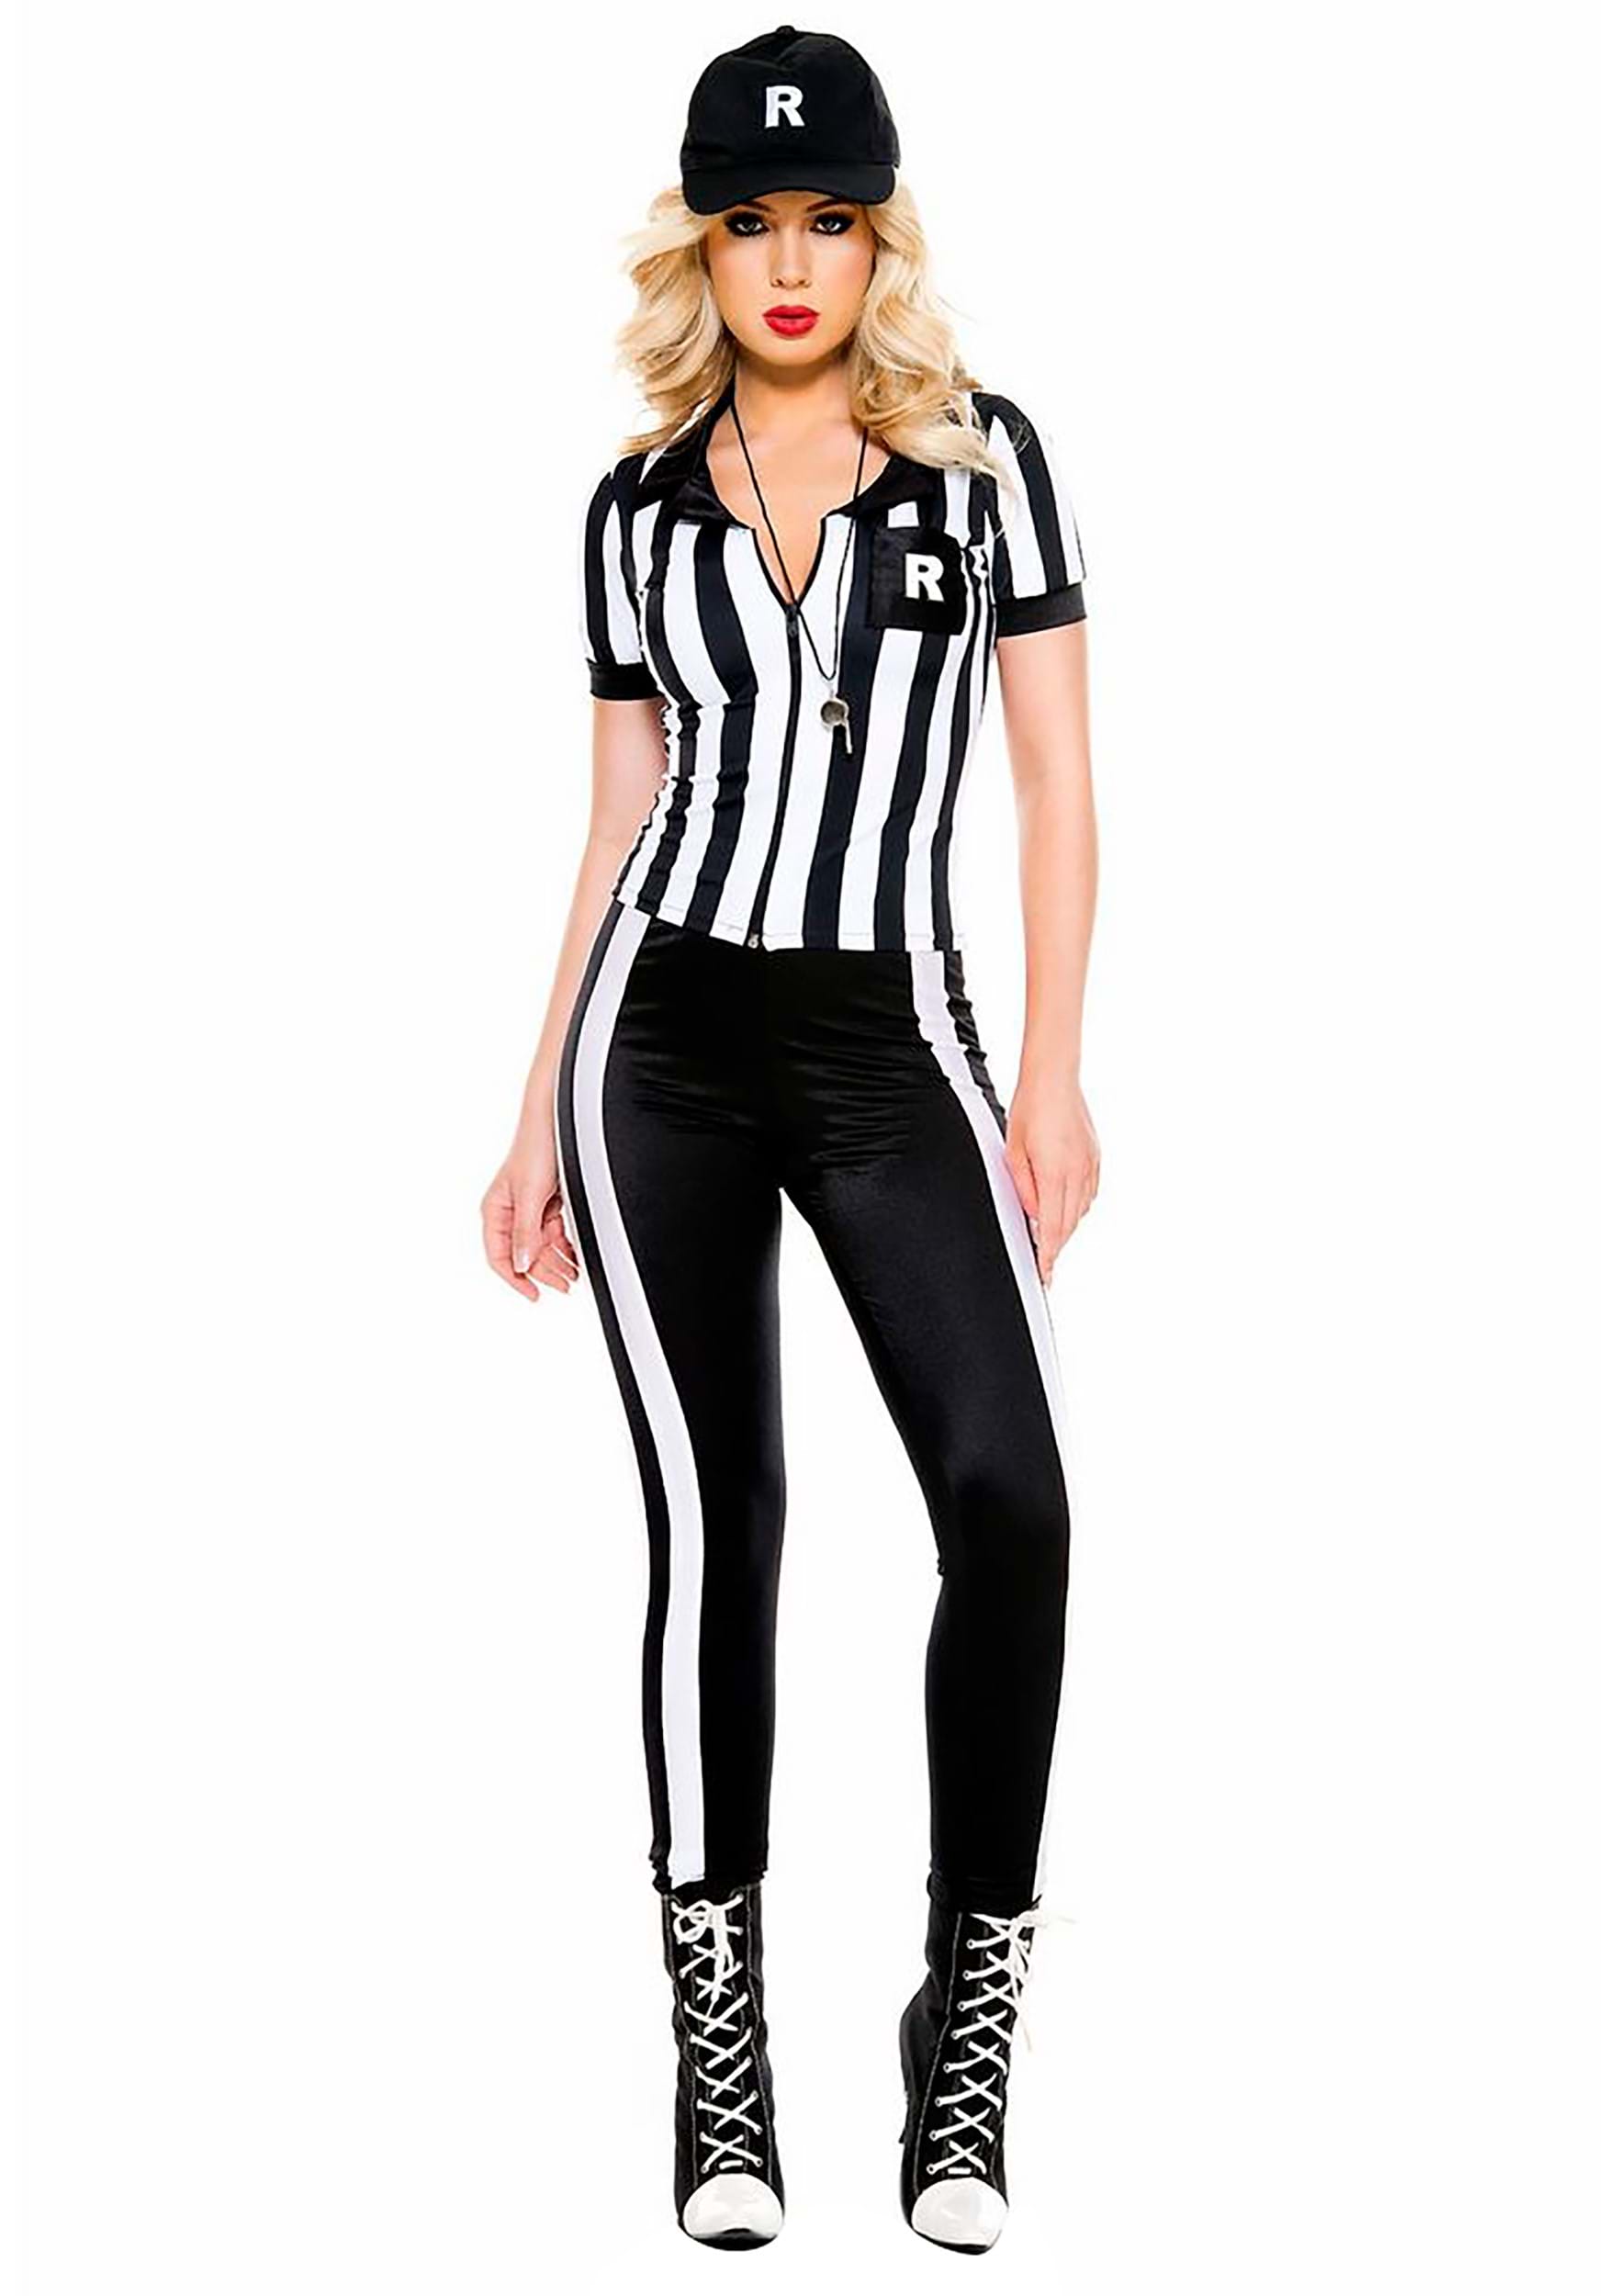 Photos - Fancy Dress Music Legs Women's Referee Costume Black/White MS70900